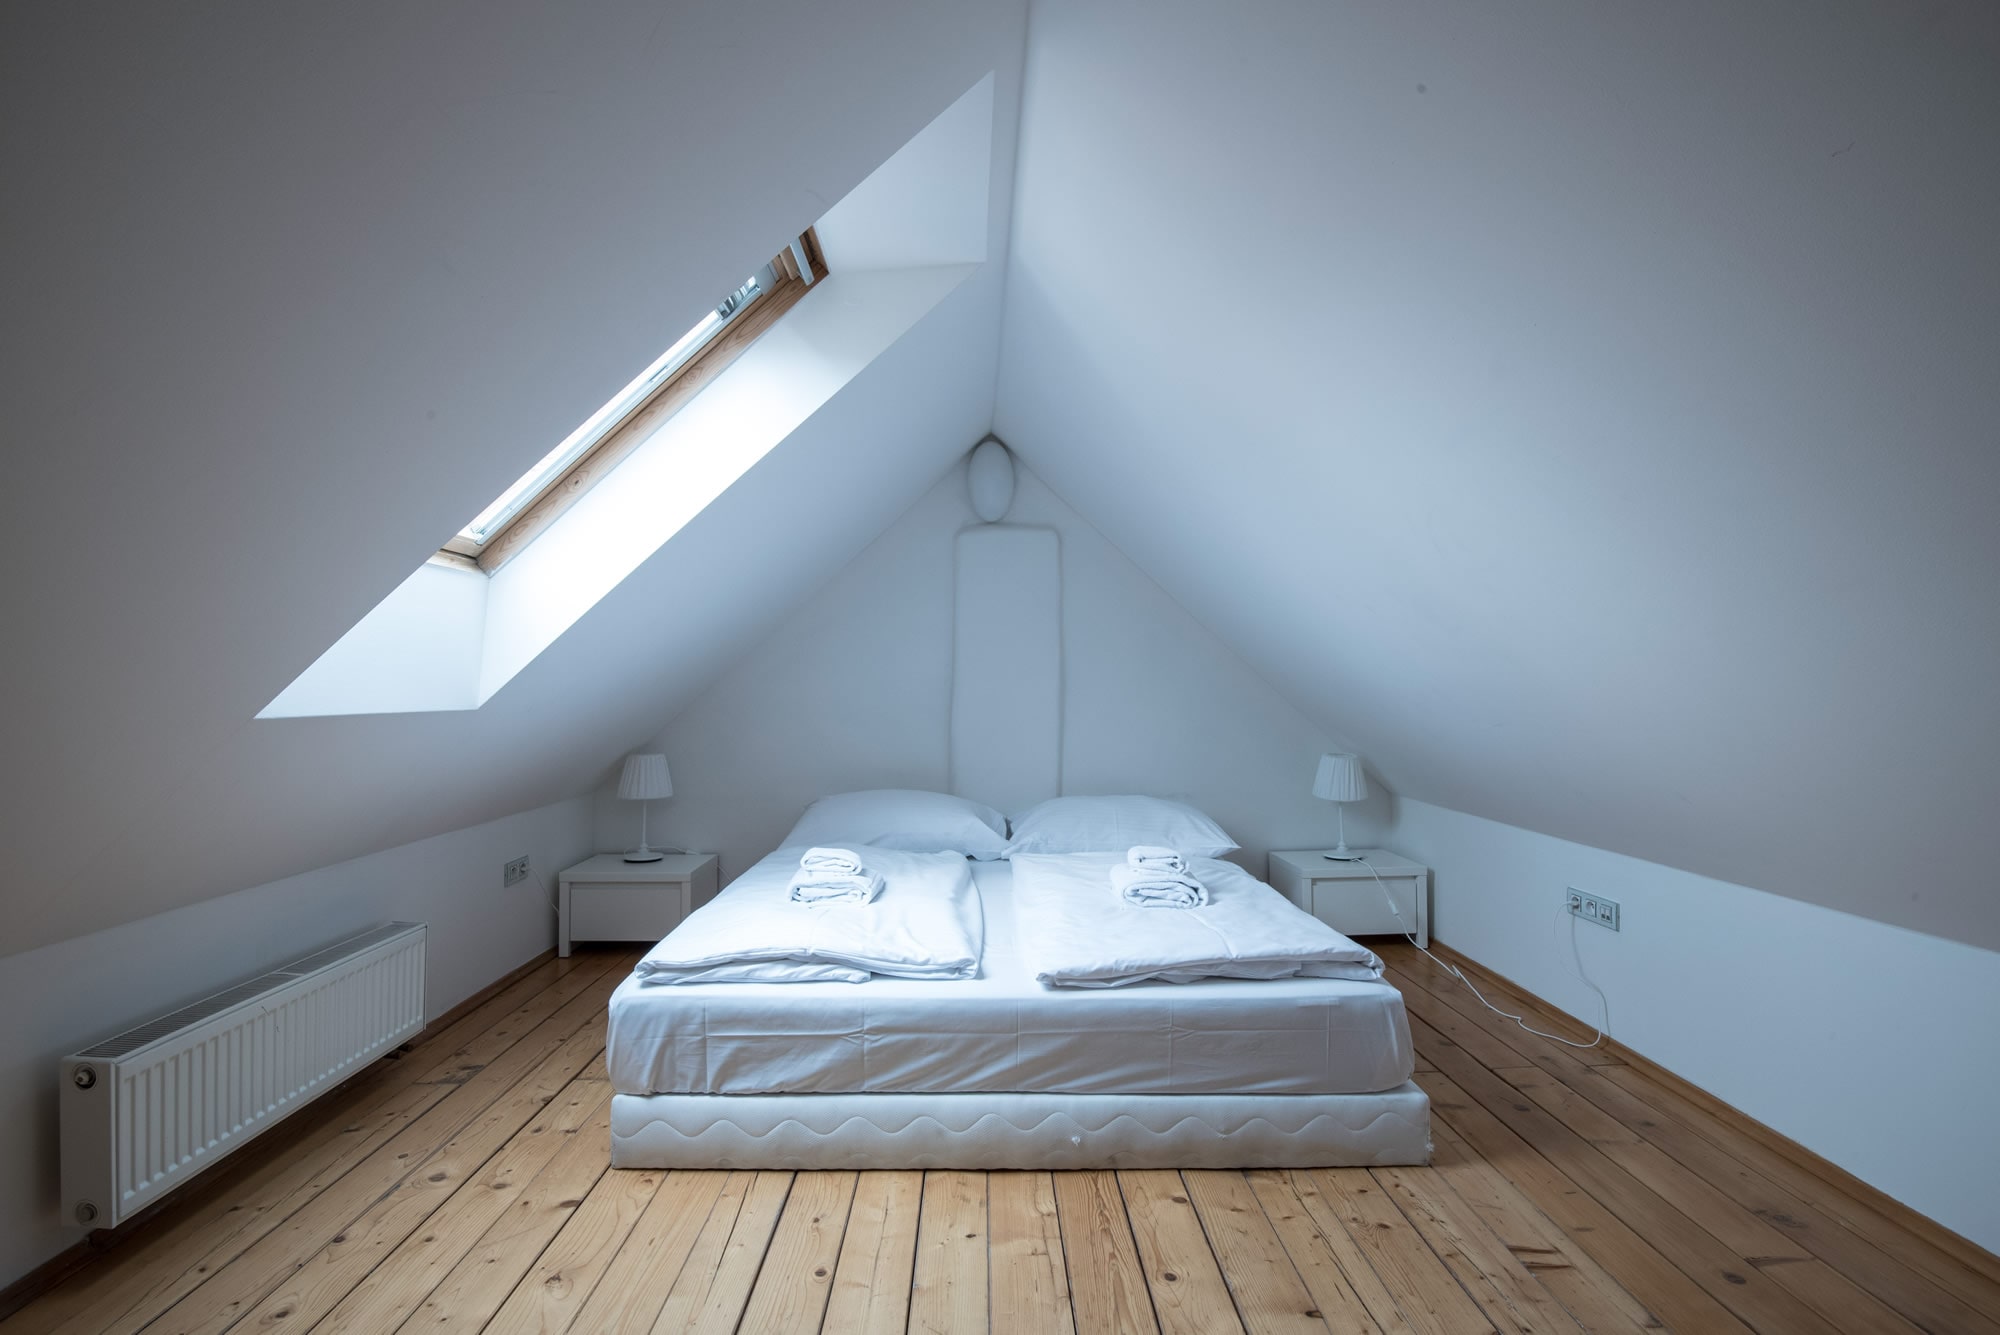 Attic bedroom with queen sized bed and wooden floor.